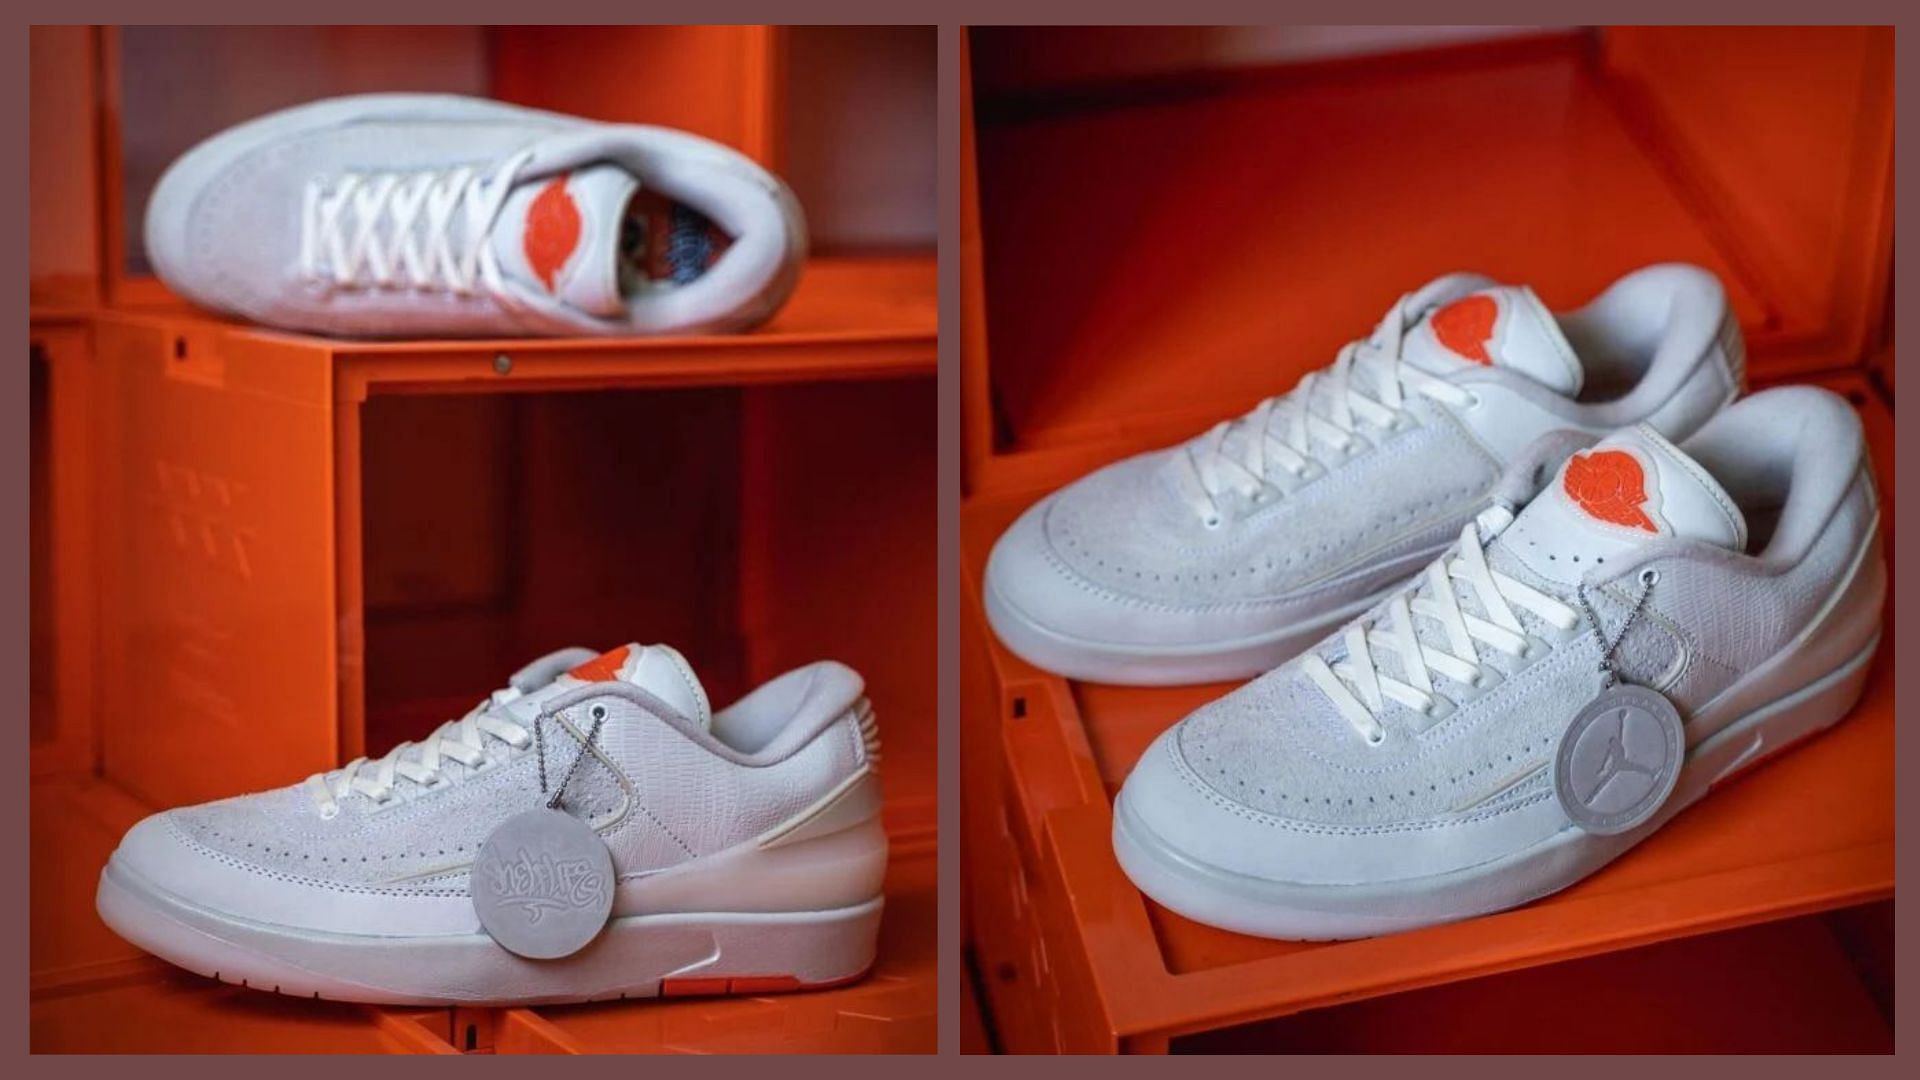 Shelflife x Air Jordan 2 Low shoes (Image via Instagram/@knowing_kicks)